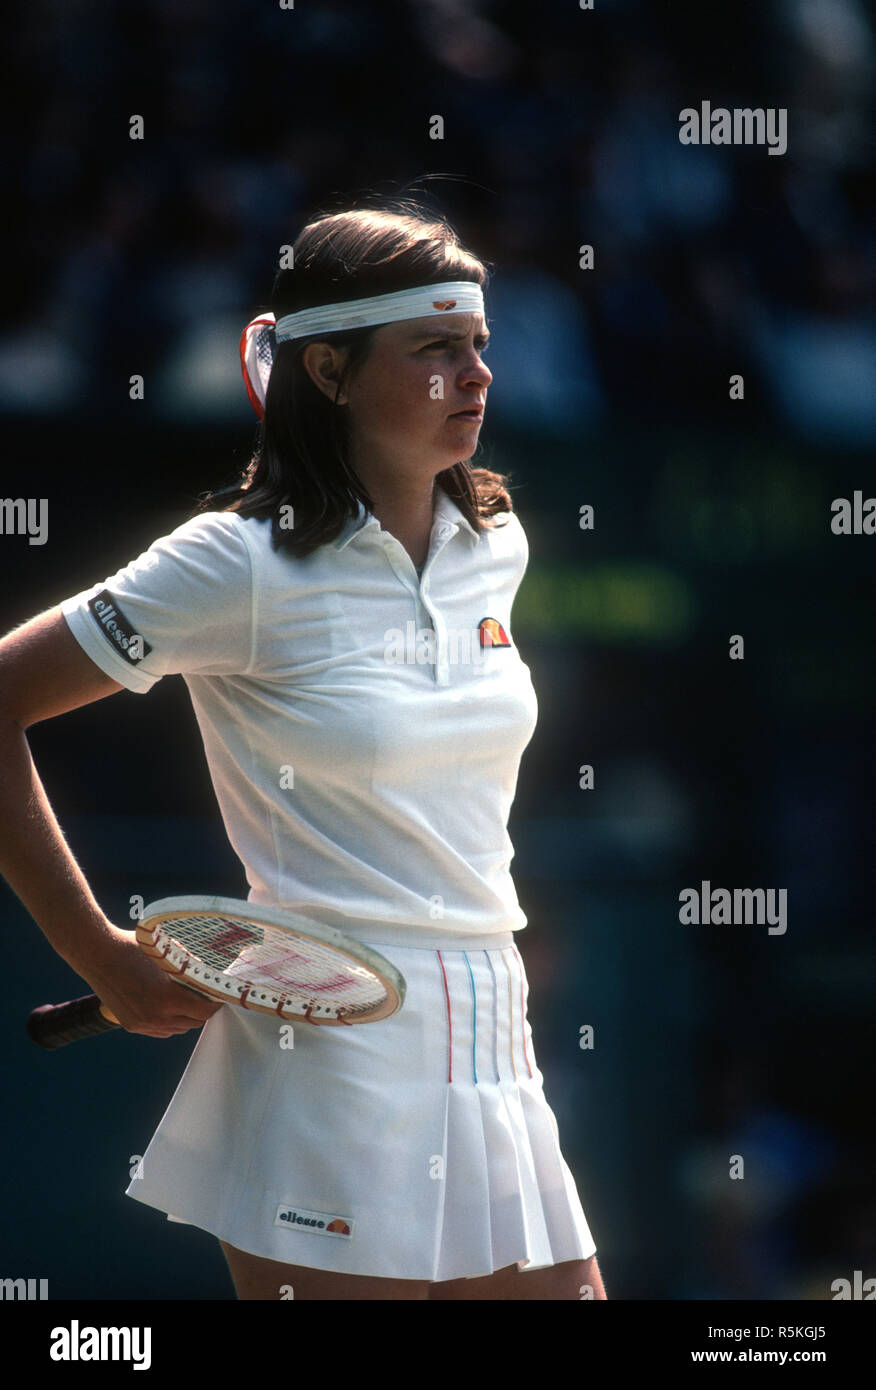 Hana Mandlikova at Wimbledon in the 1980's Stock Photo - Alamy